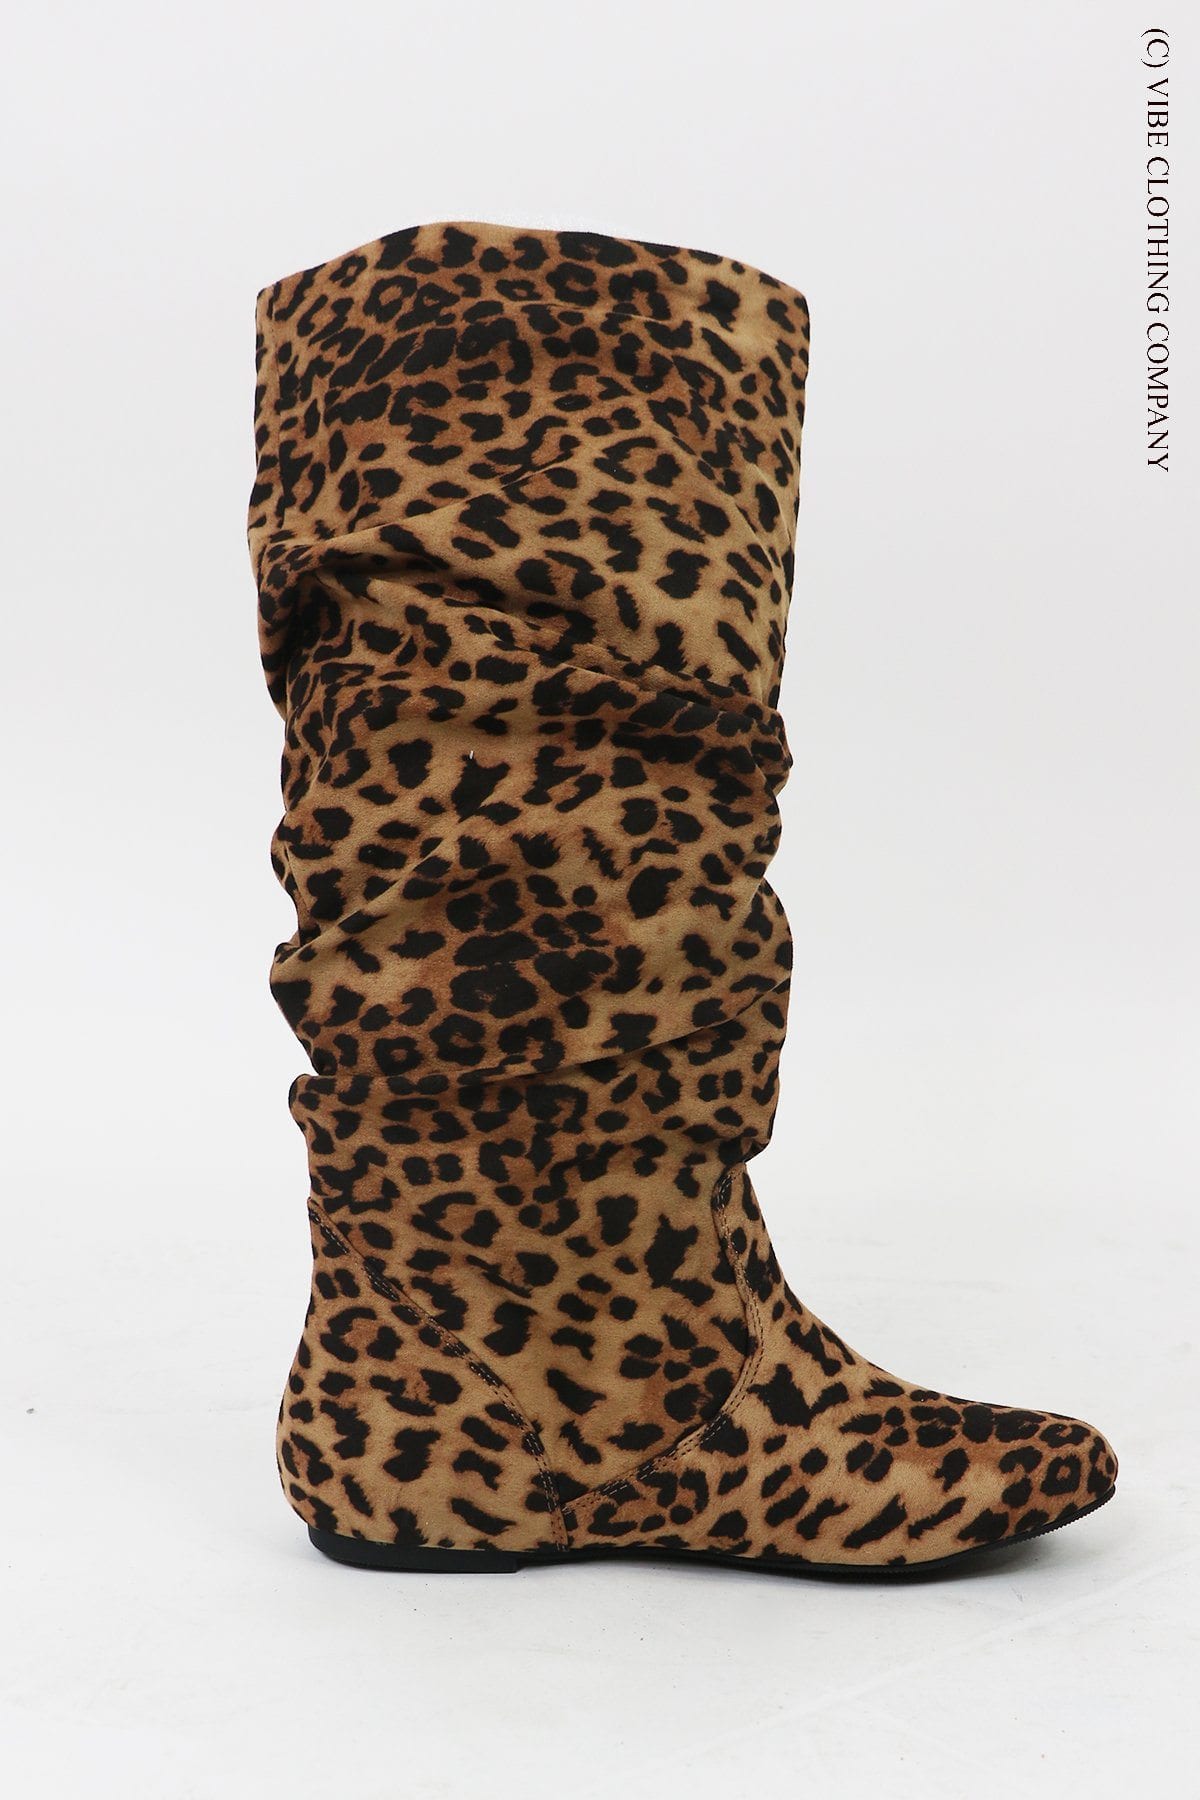 LaLa Leopard Boots Shoes and Purses verona 